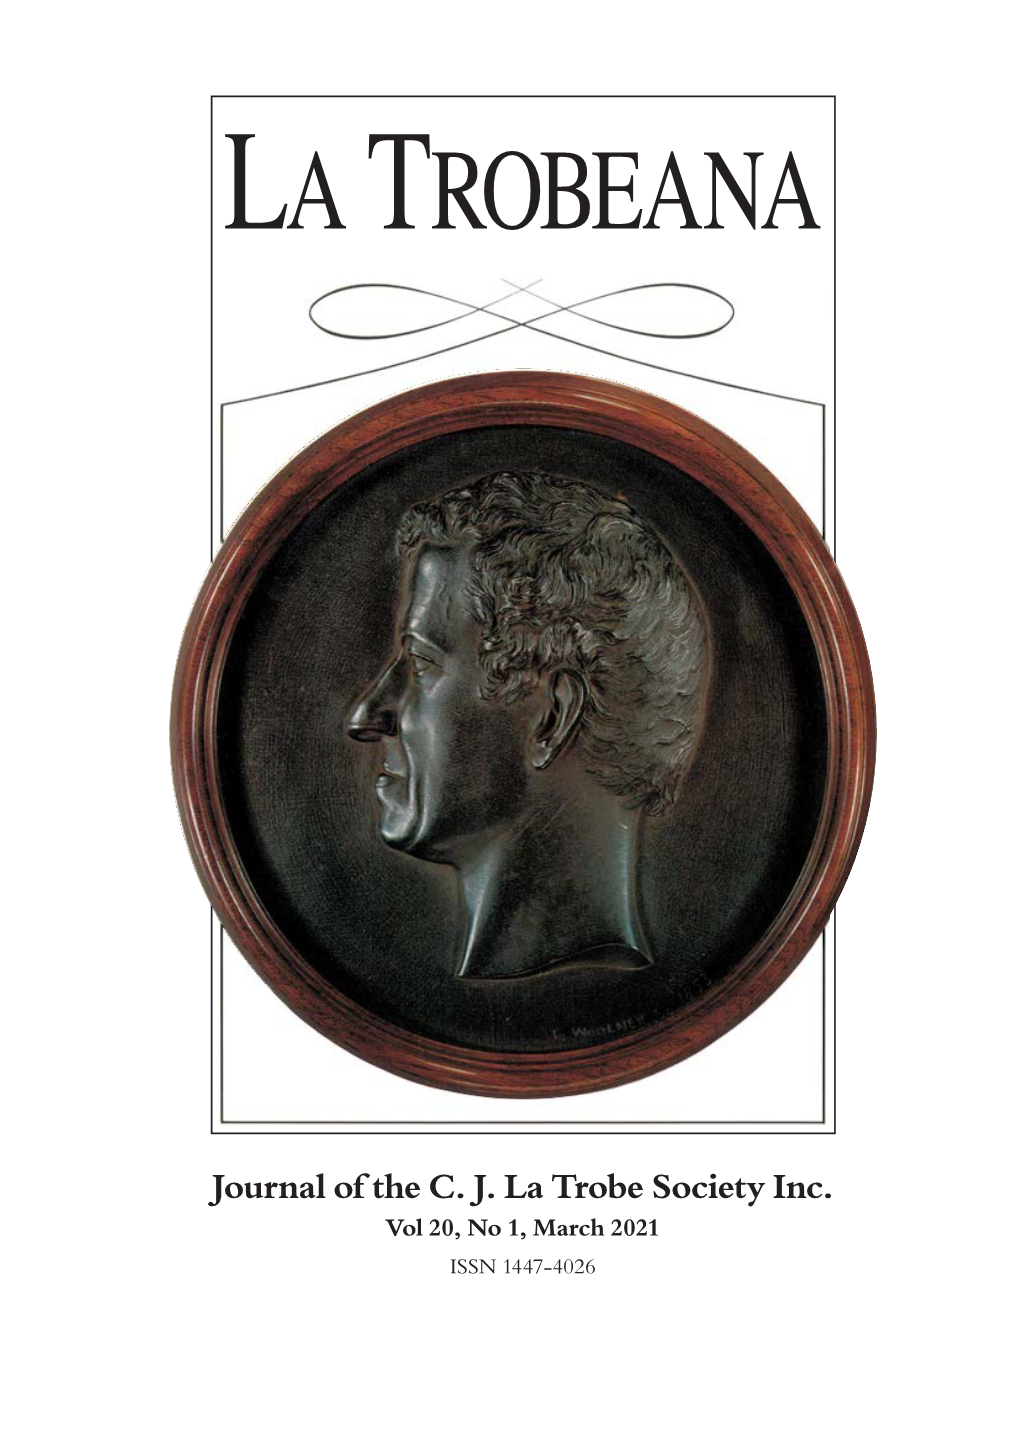 Journal of the C. J. La Trobe Society Inc. Vol 20, No 1, March 2021 ISSN 1447‑4026 La Trobeana Journal of the C J La Trobe Society Inc Vol 20, No 1, March 2021